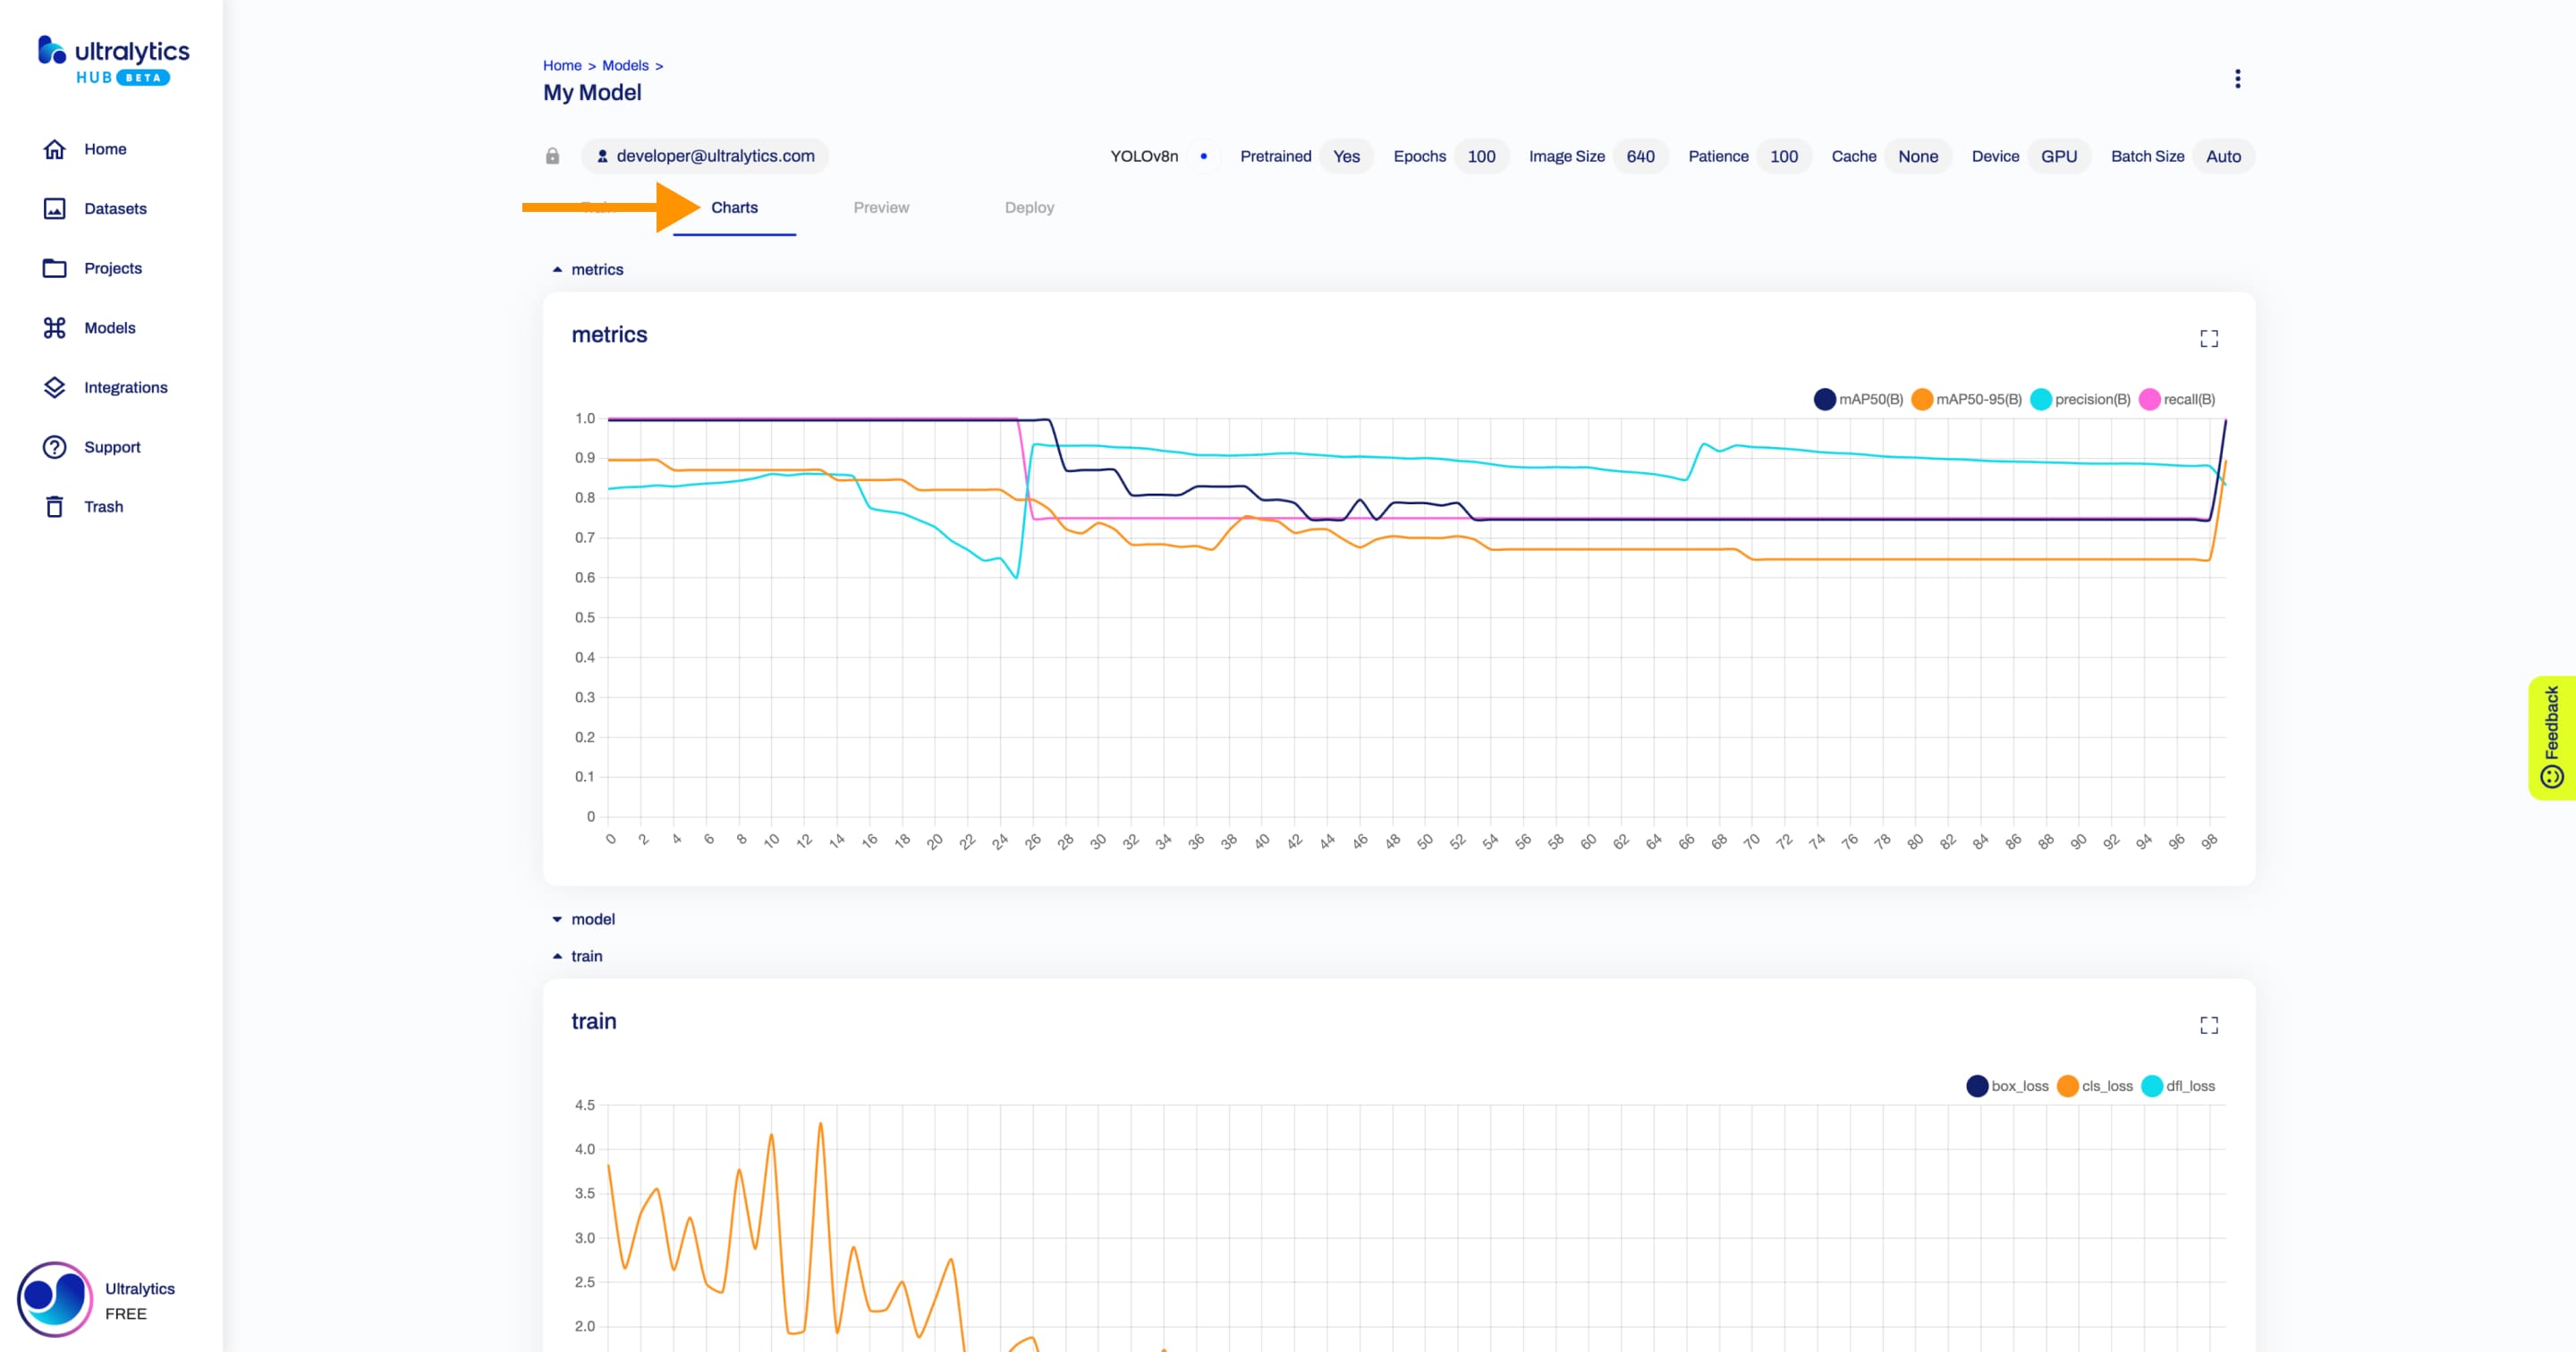 Ultralytics Скриншот HUB вкладки Preview внутри страницы Model со стрелкой, указывающей на вкладку Charts